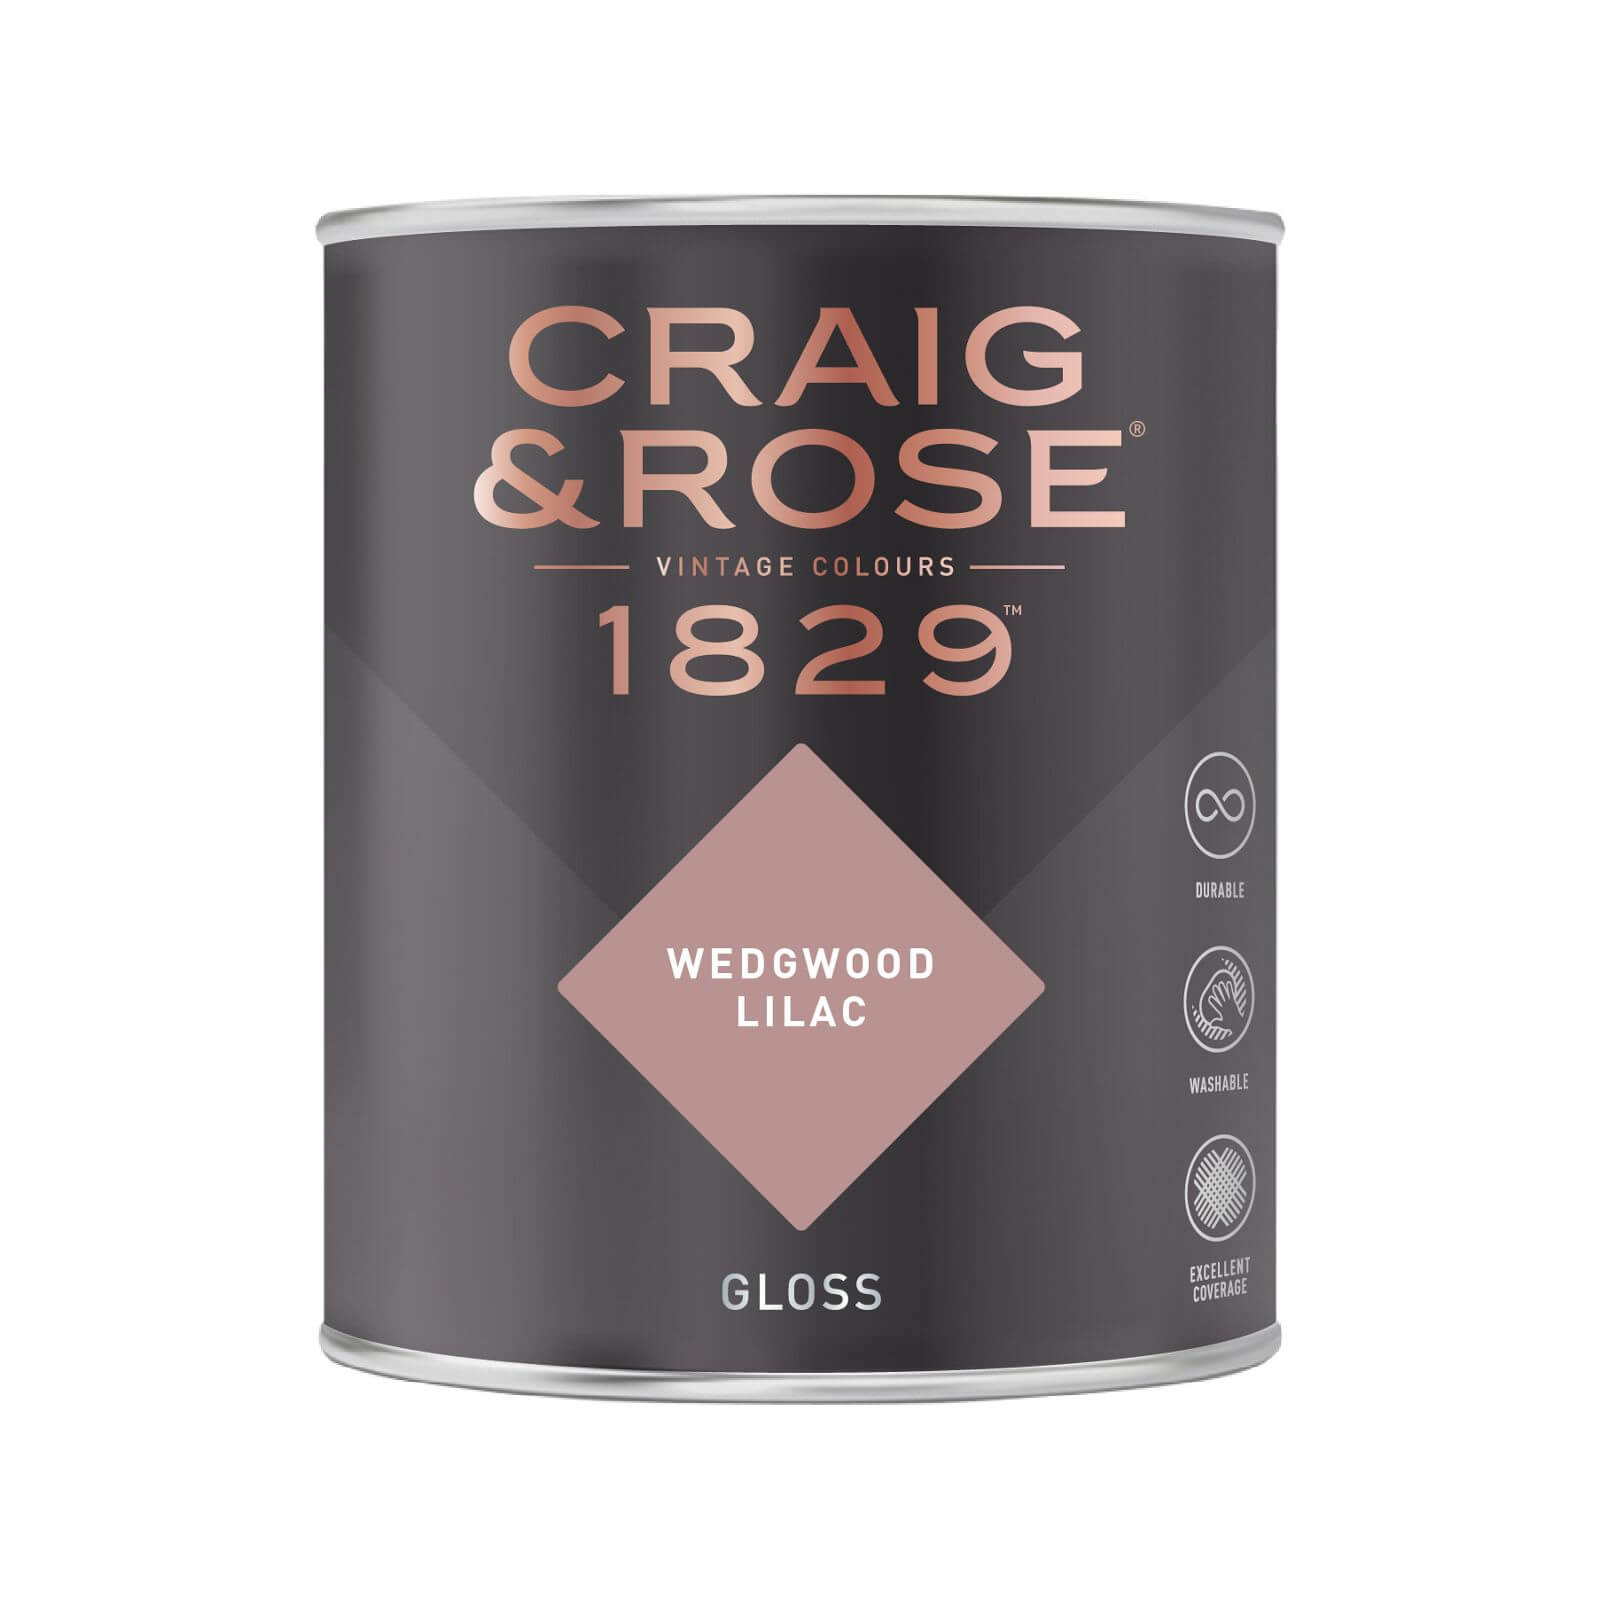 Craig & Rose 1829 Gloss Paint Wedgwood Lilac - 750ml